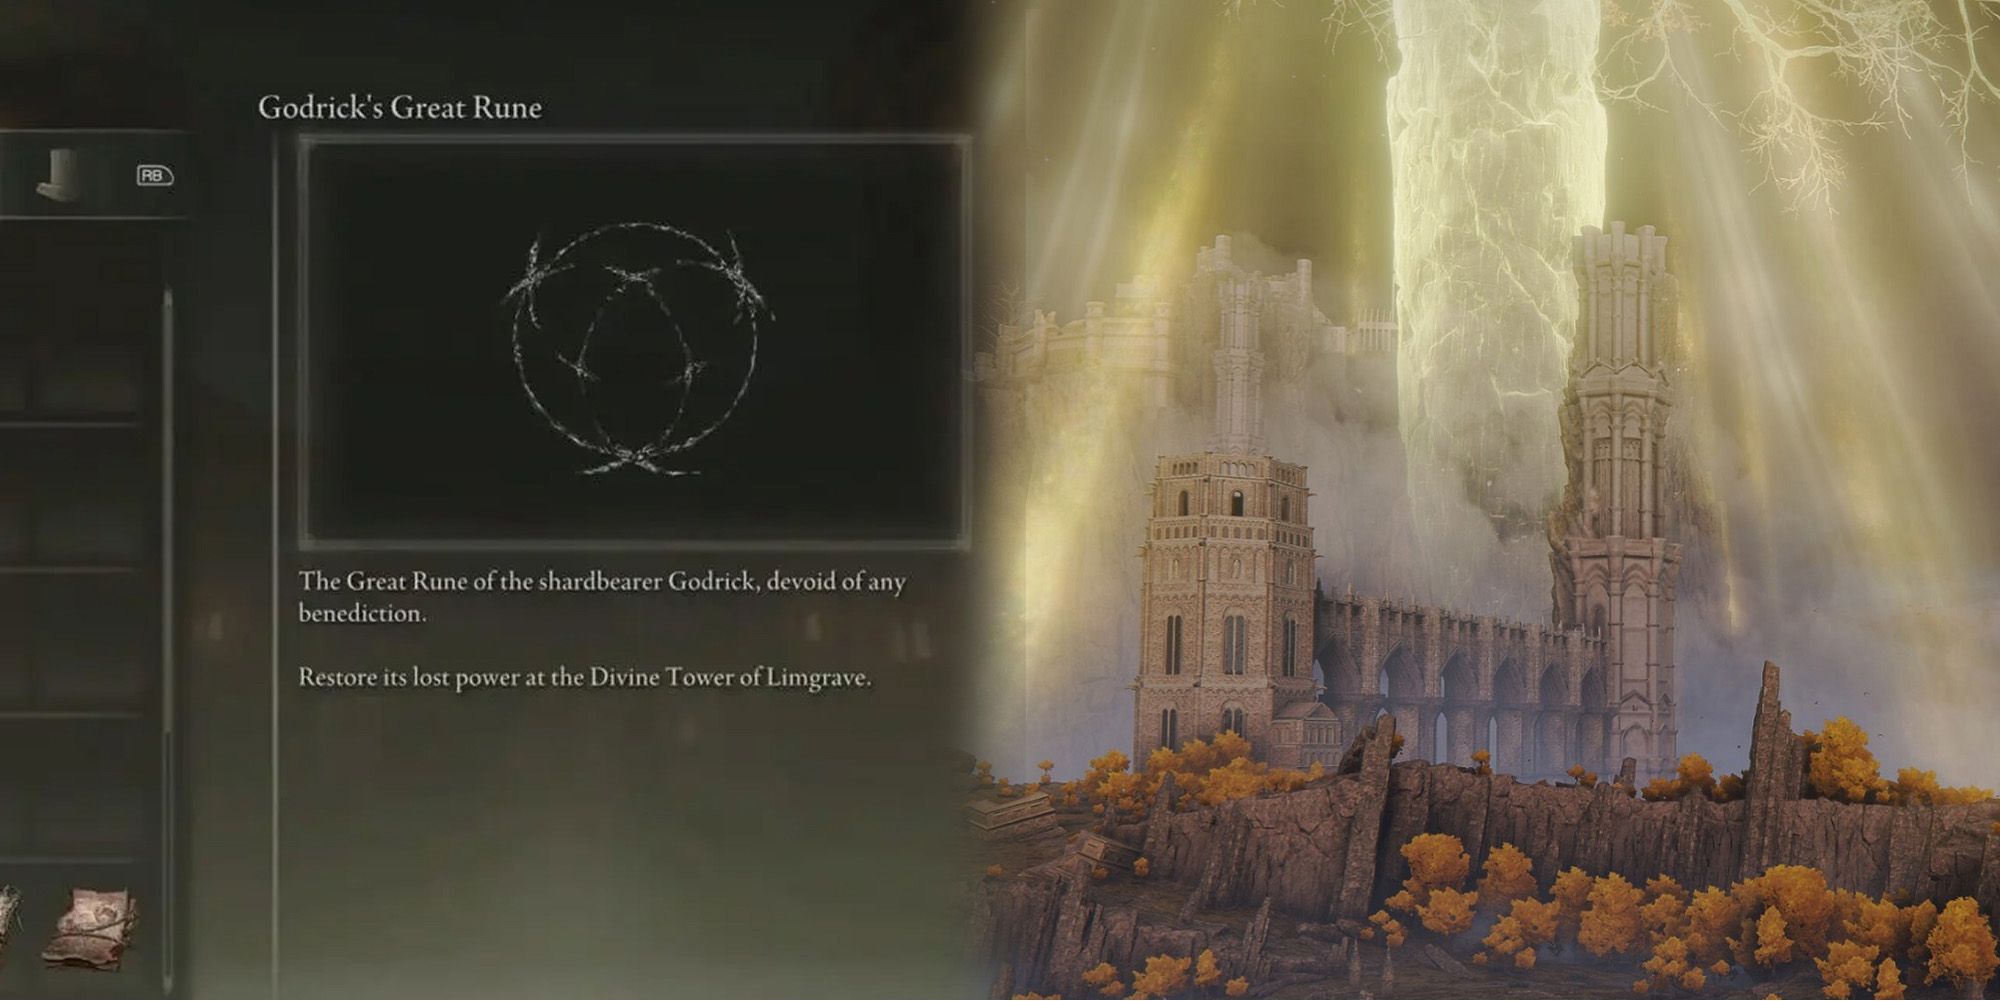 Elden Ring - Godrick's Great Rune Item Description Side by Side With Divine Tower Screenshot